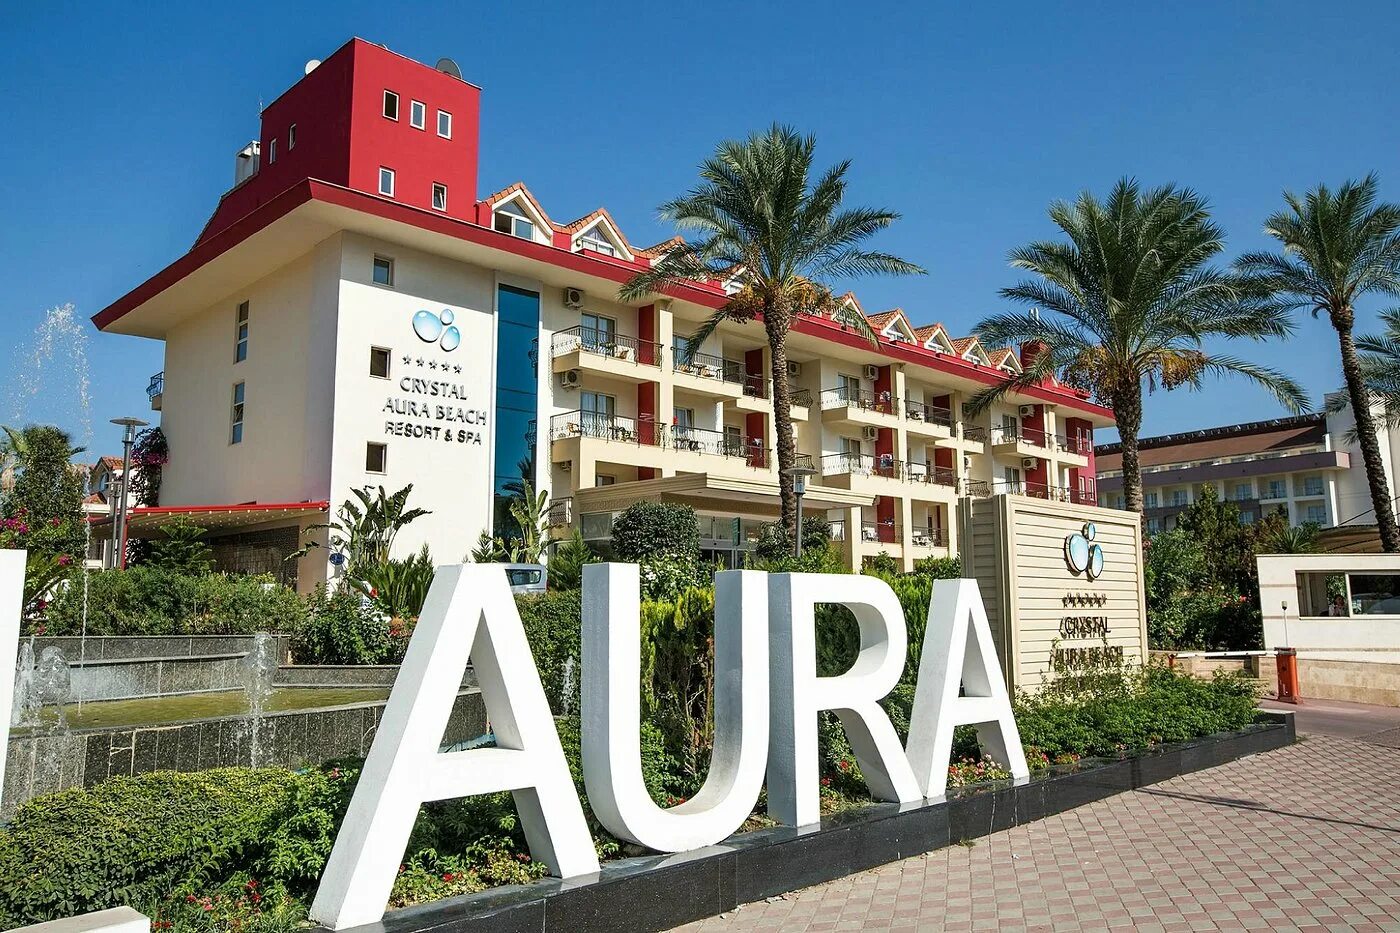 Кристалл Аура Бич Резорт. Отель Crystal Aura Beach Resort & Spa. Crystal Aura Beach Resort 5 Кемер. Кристалл Аура Кемер Турция.